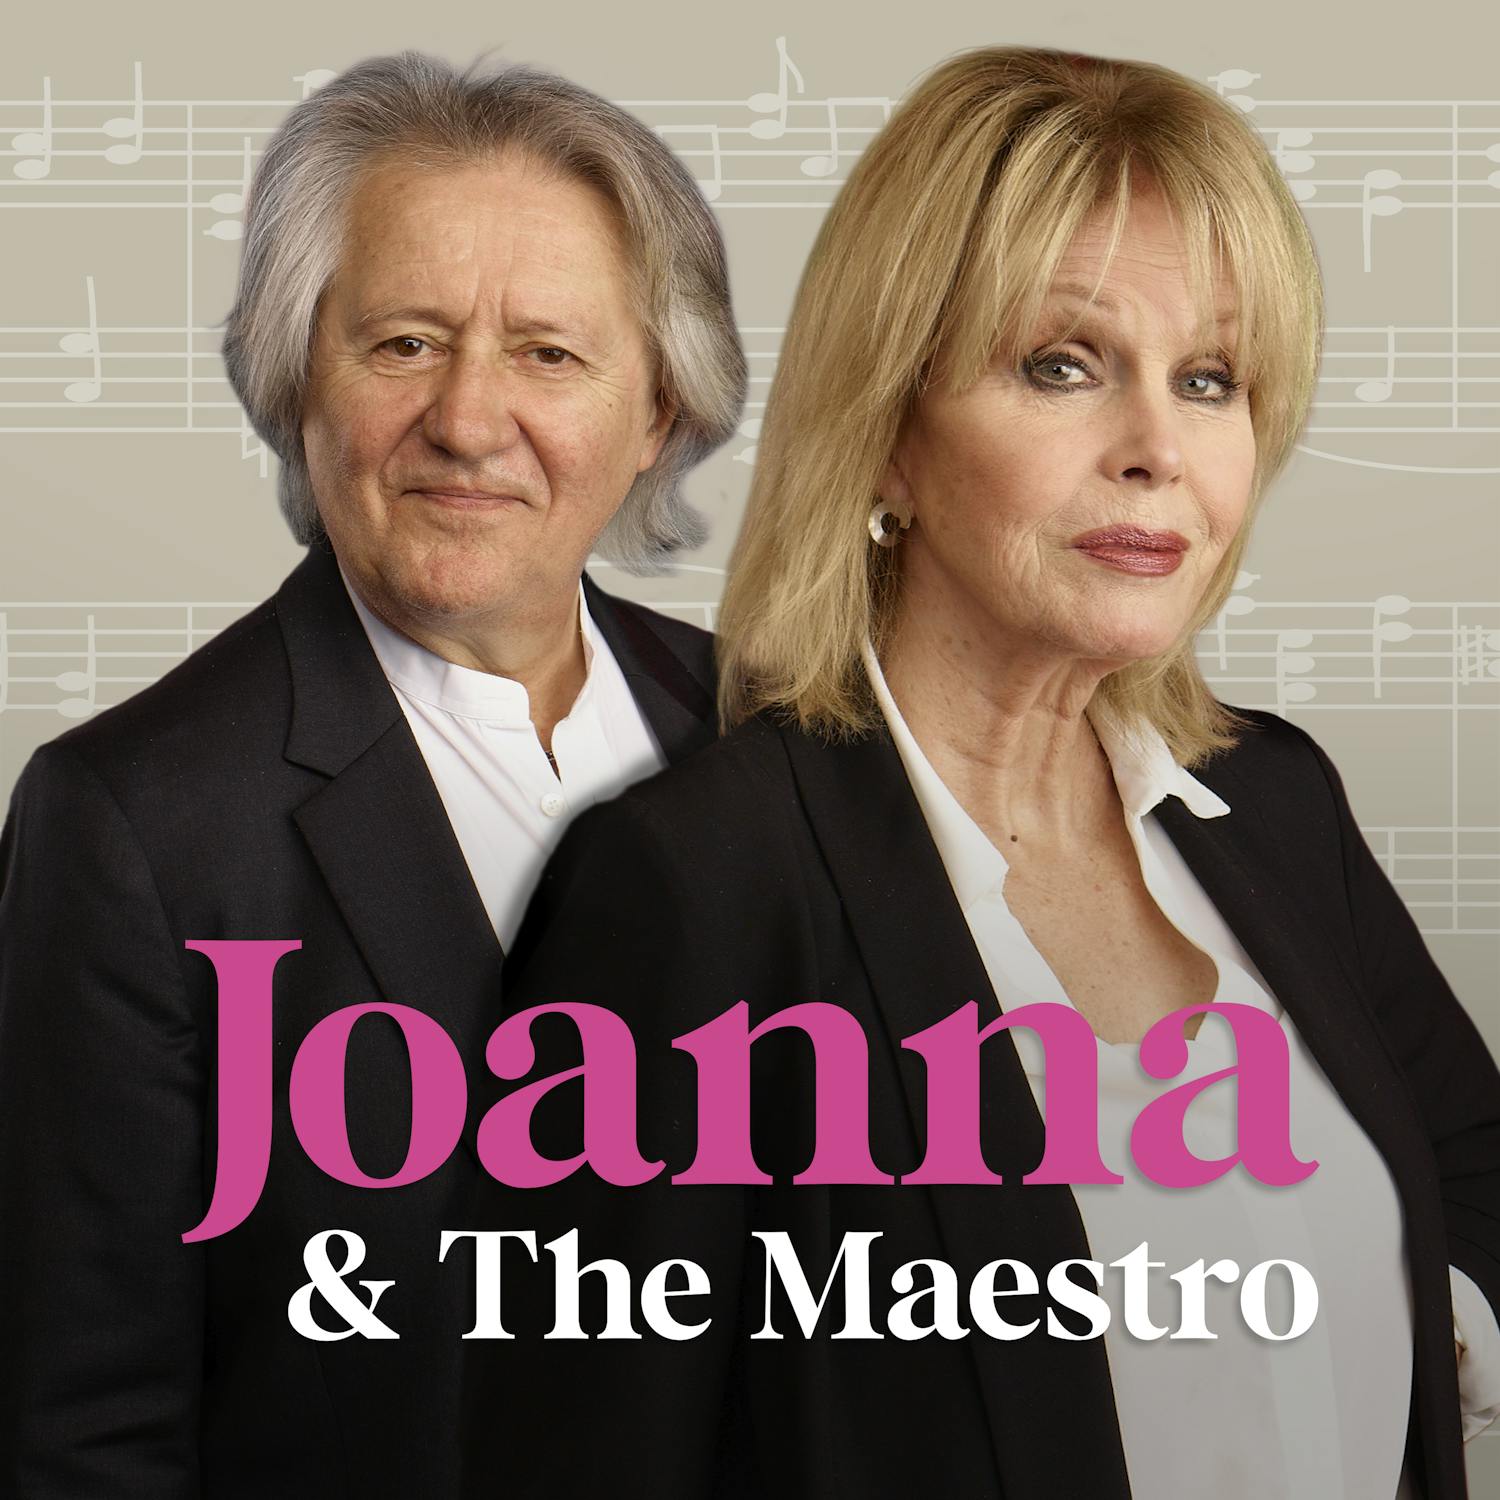 Joanna Lumley & The Maestro podcast show image